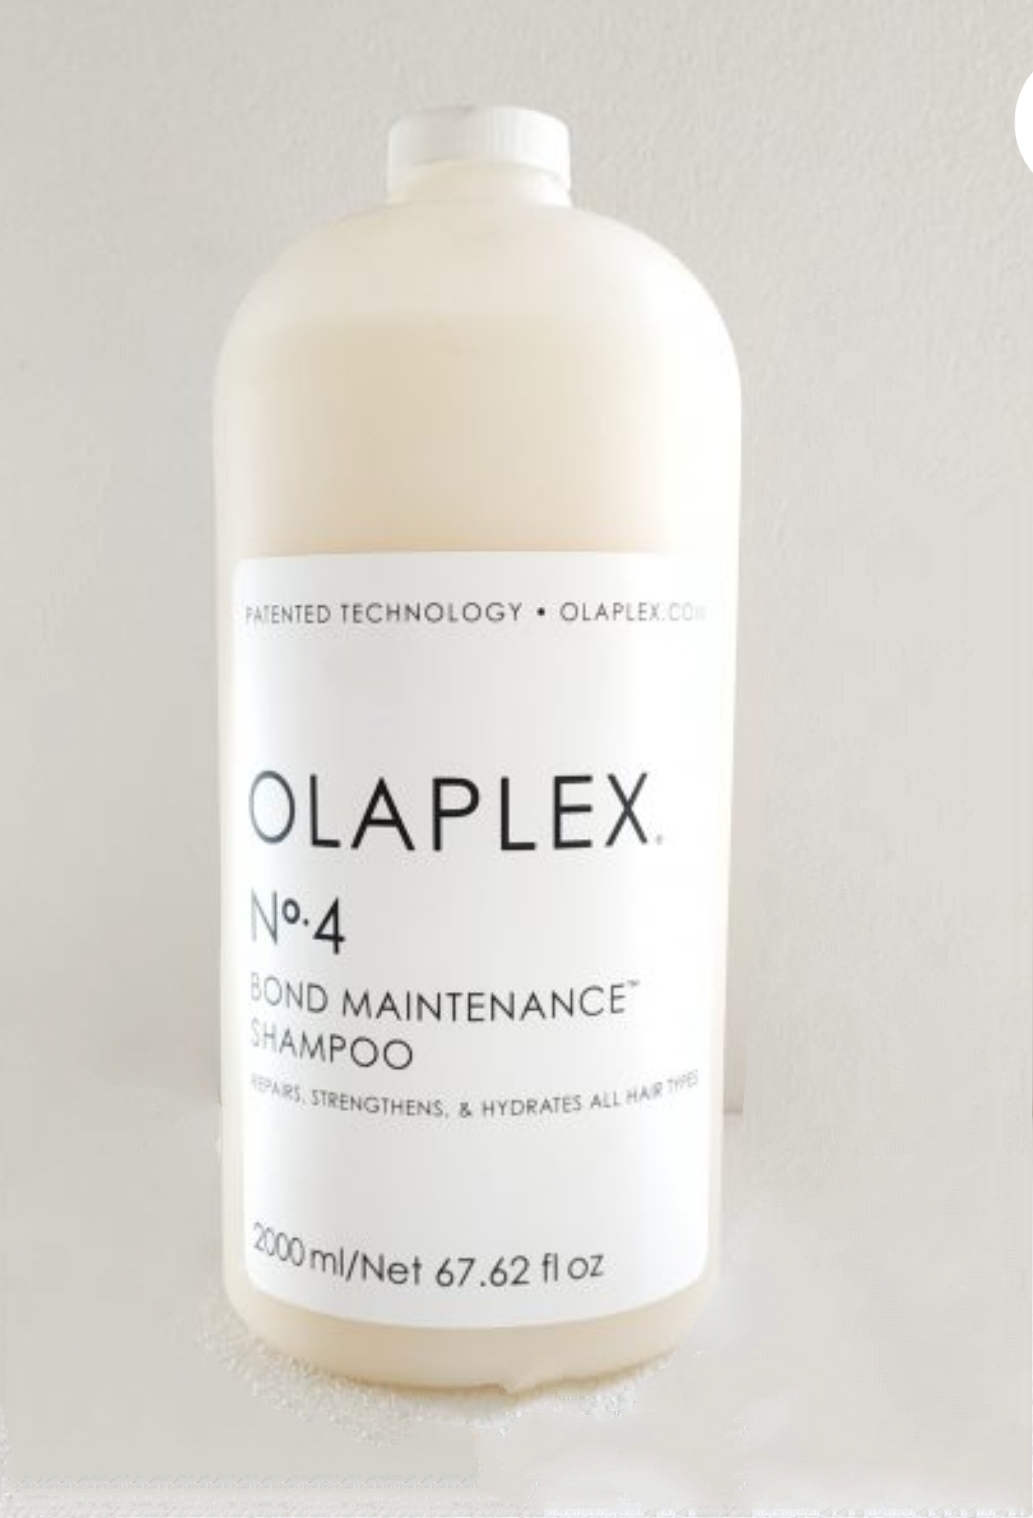 OLAPLEX N4 SHAMPOO BOND MAINTENANCE. - Intercosmetic